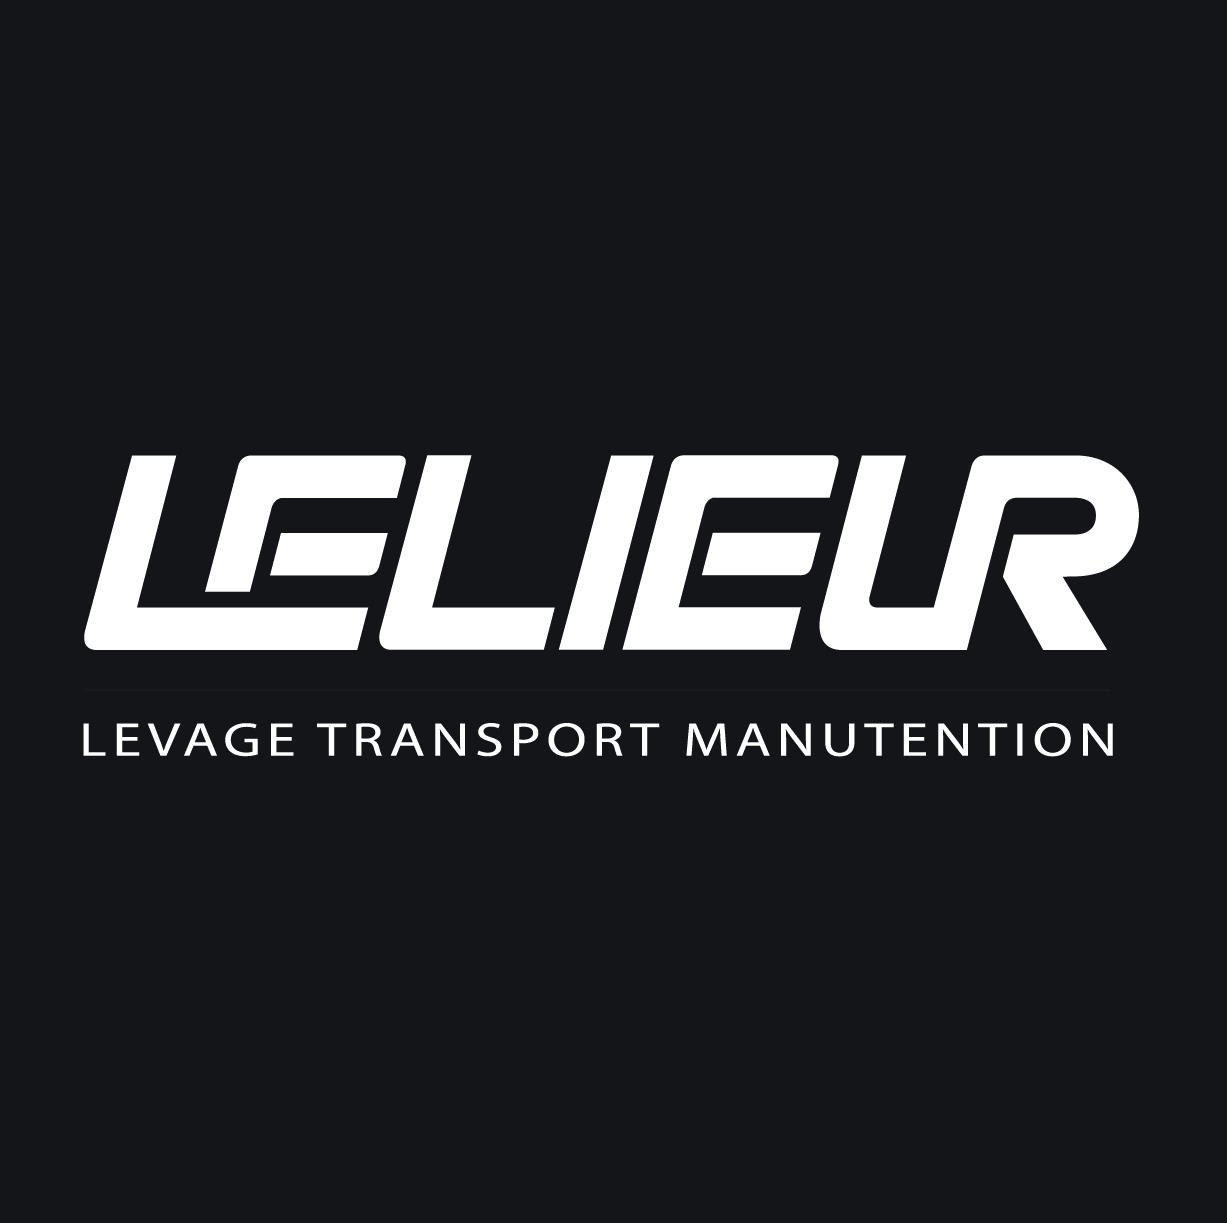 Lelieur Levage Transport Manutention